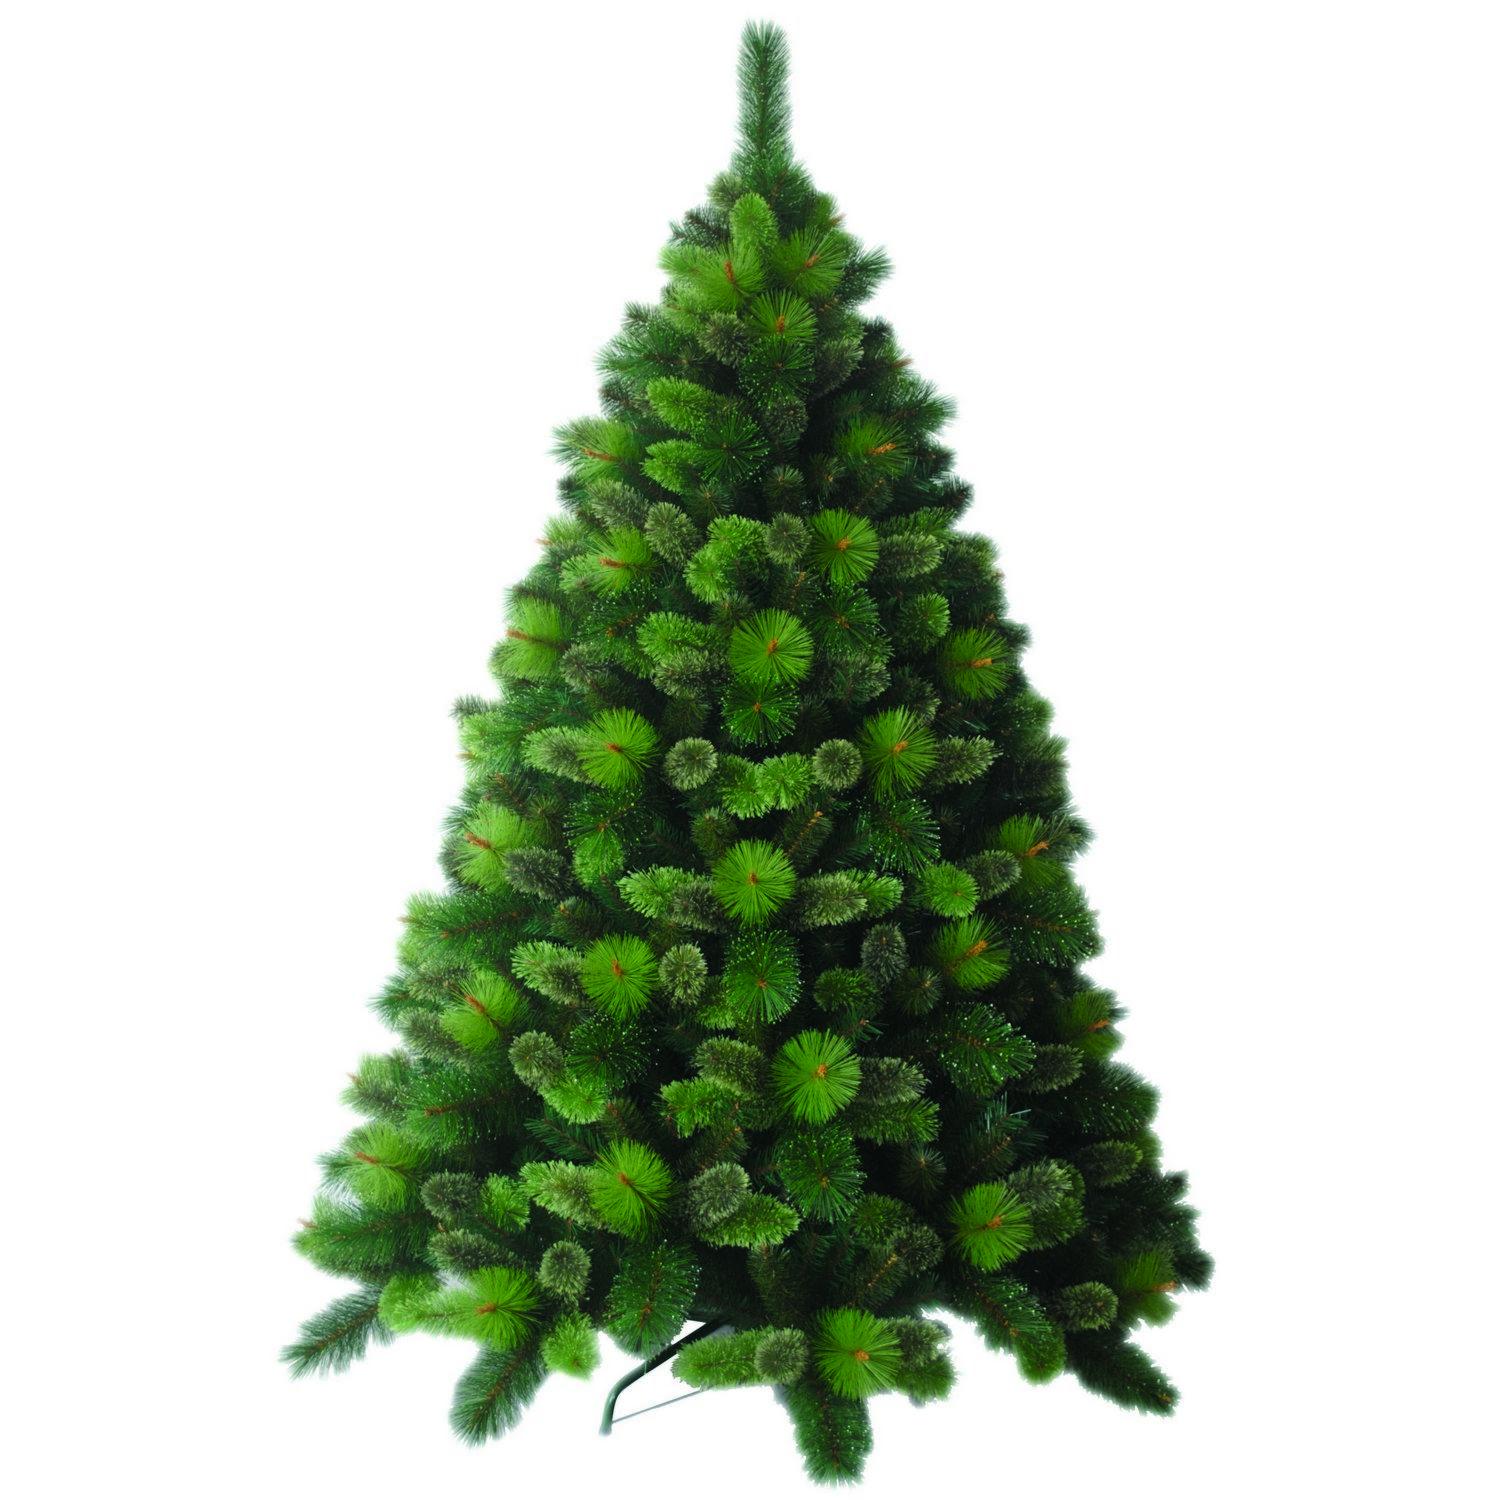 Kensington Christmas Tree with Droplets  - Green / 6.5ft Image 1